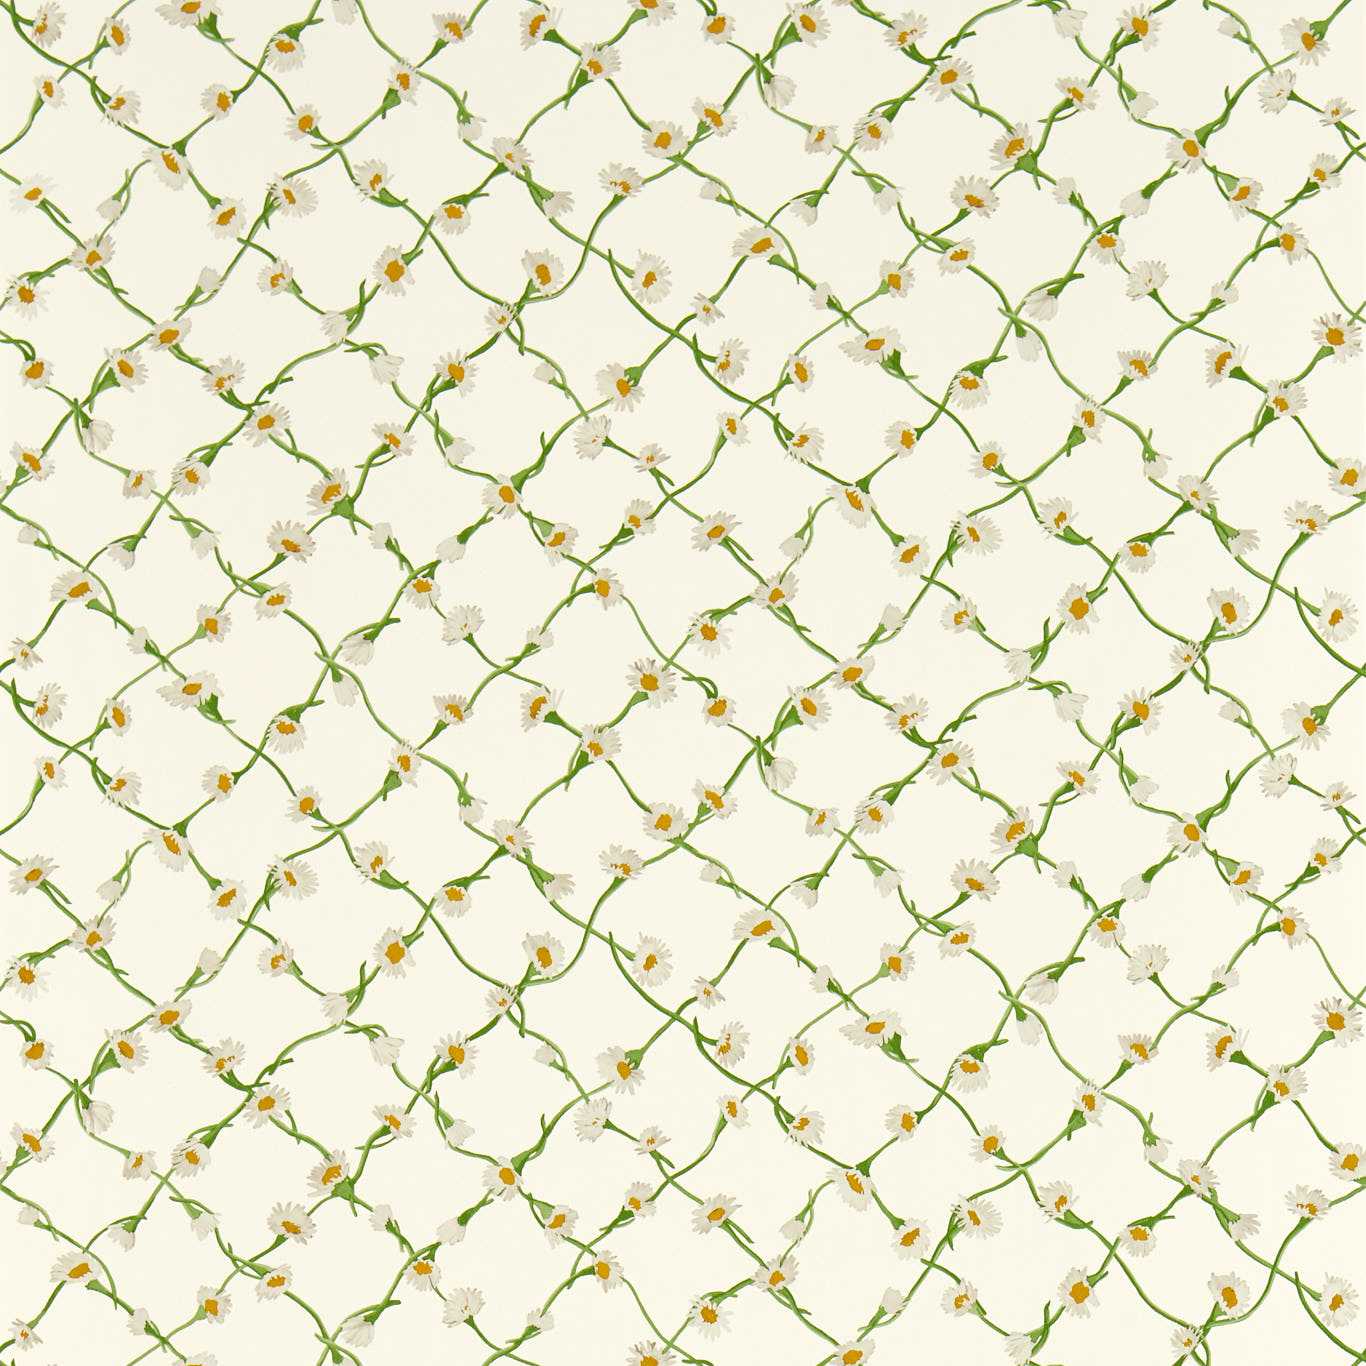 Daisy Trellis Emerald/Pearl Wallpaper HSRW113043 by Harlequin